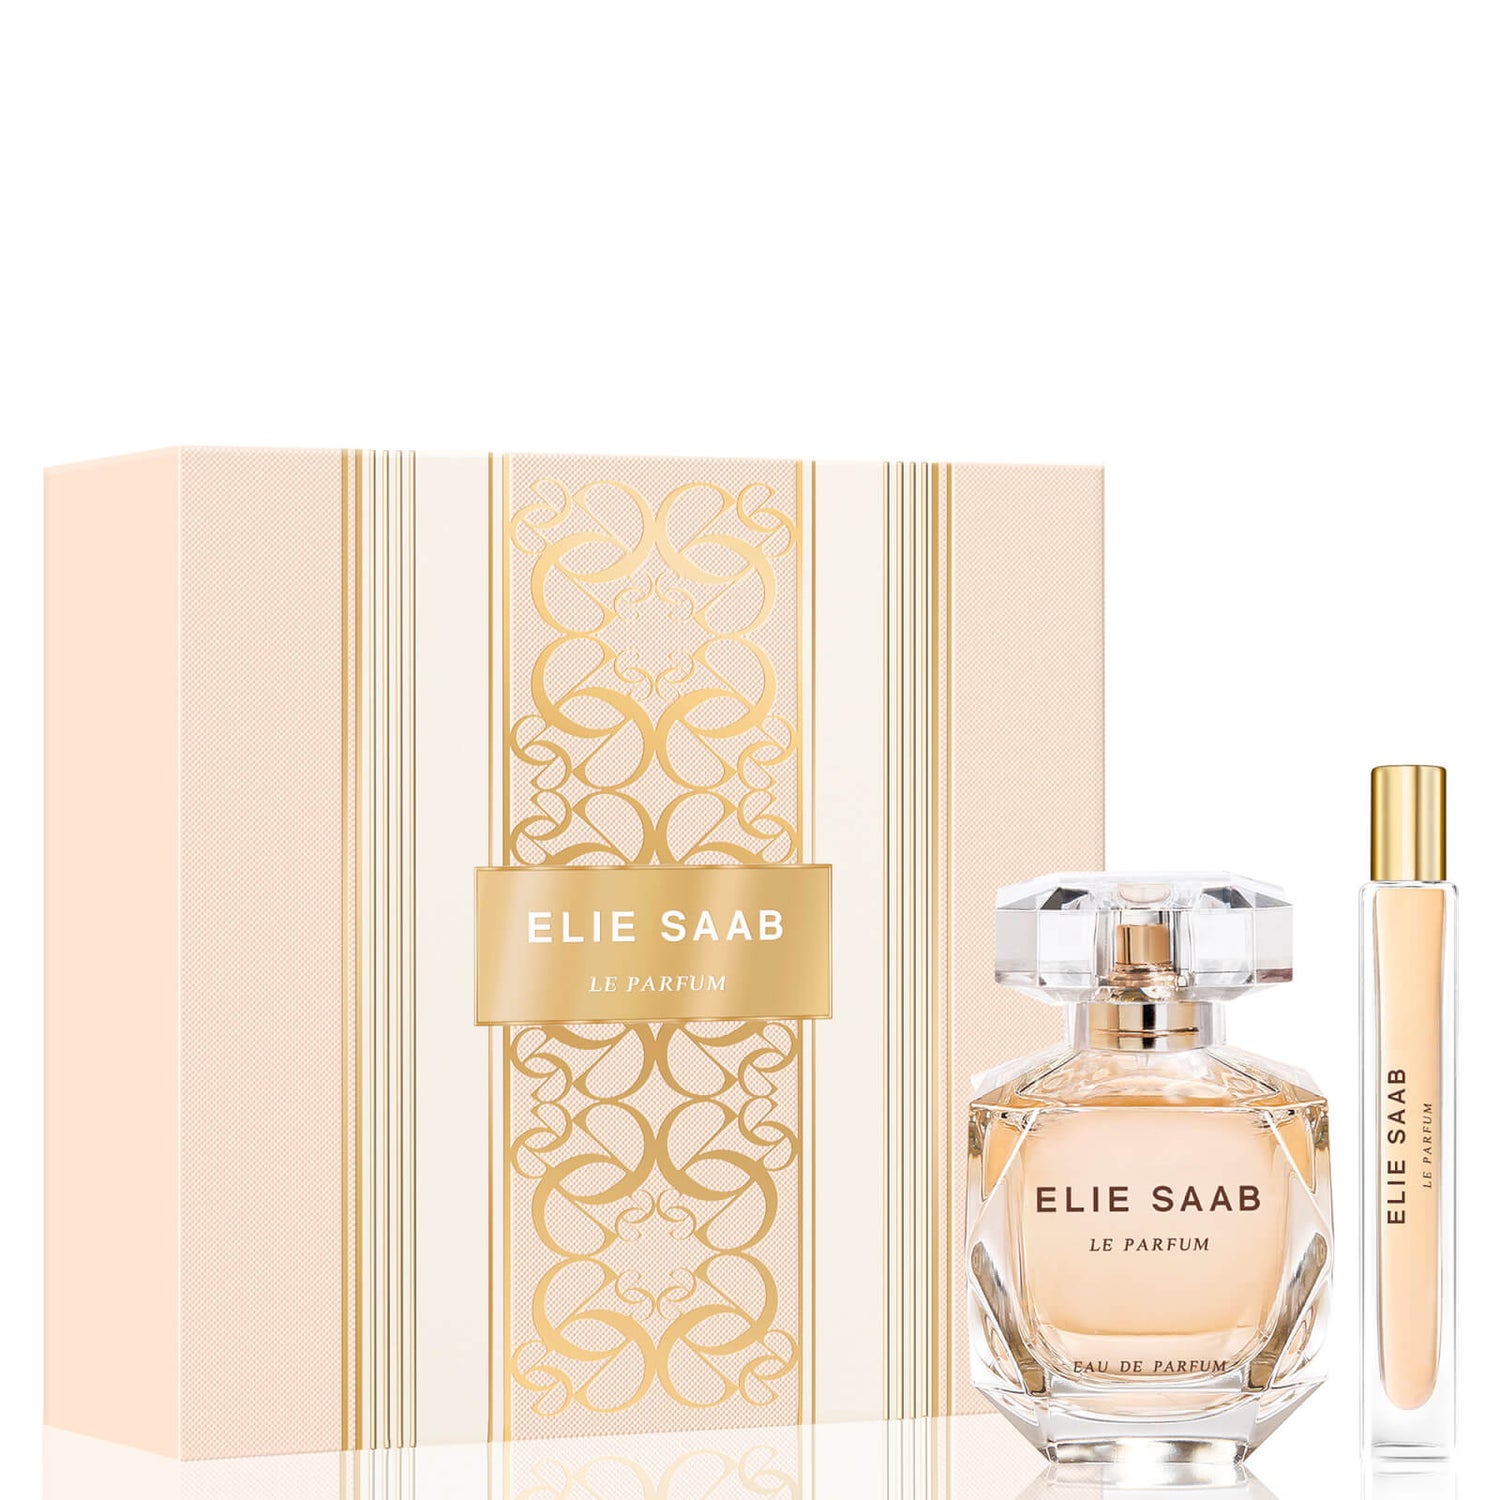 Elie Saab Le Parfum Eau de Parfum Spray 50ml Gift Set (Worth £88.00)